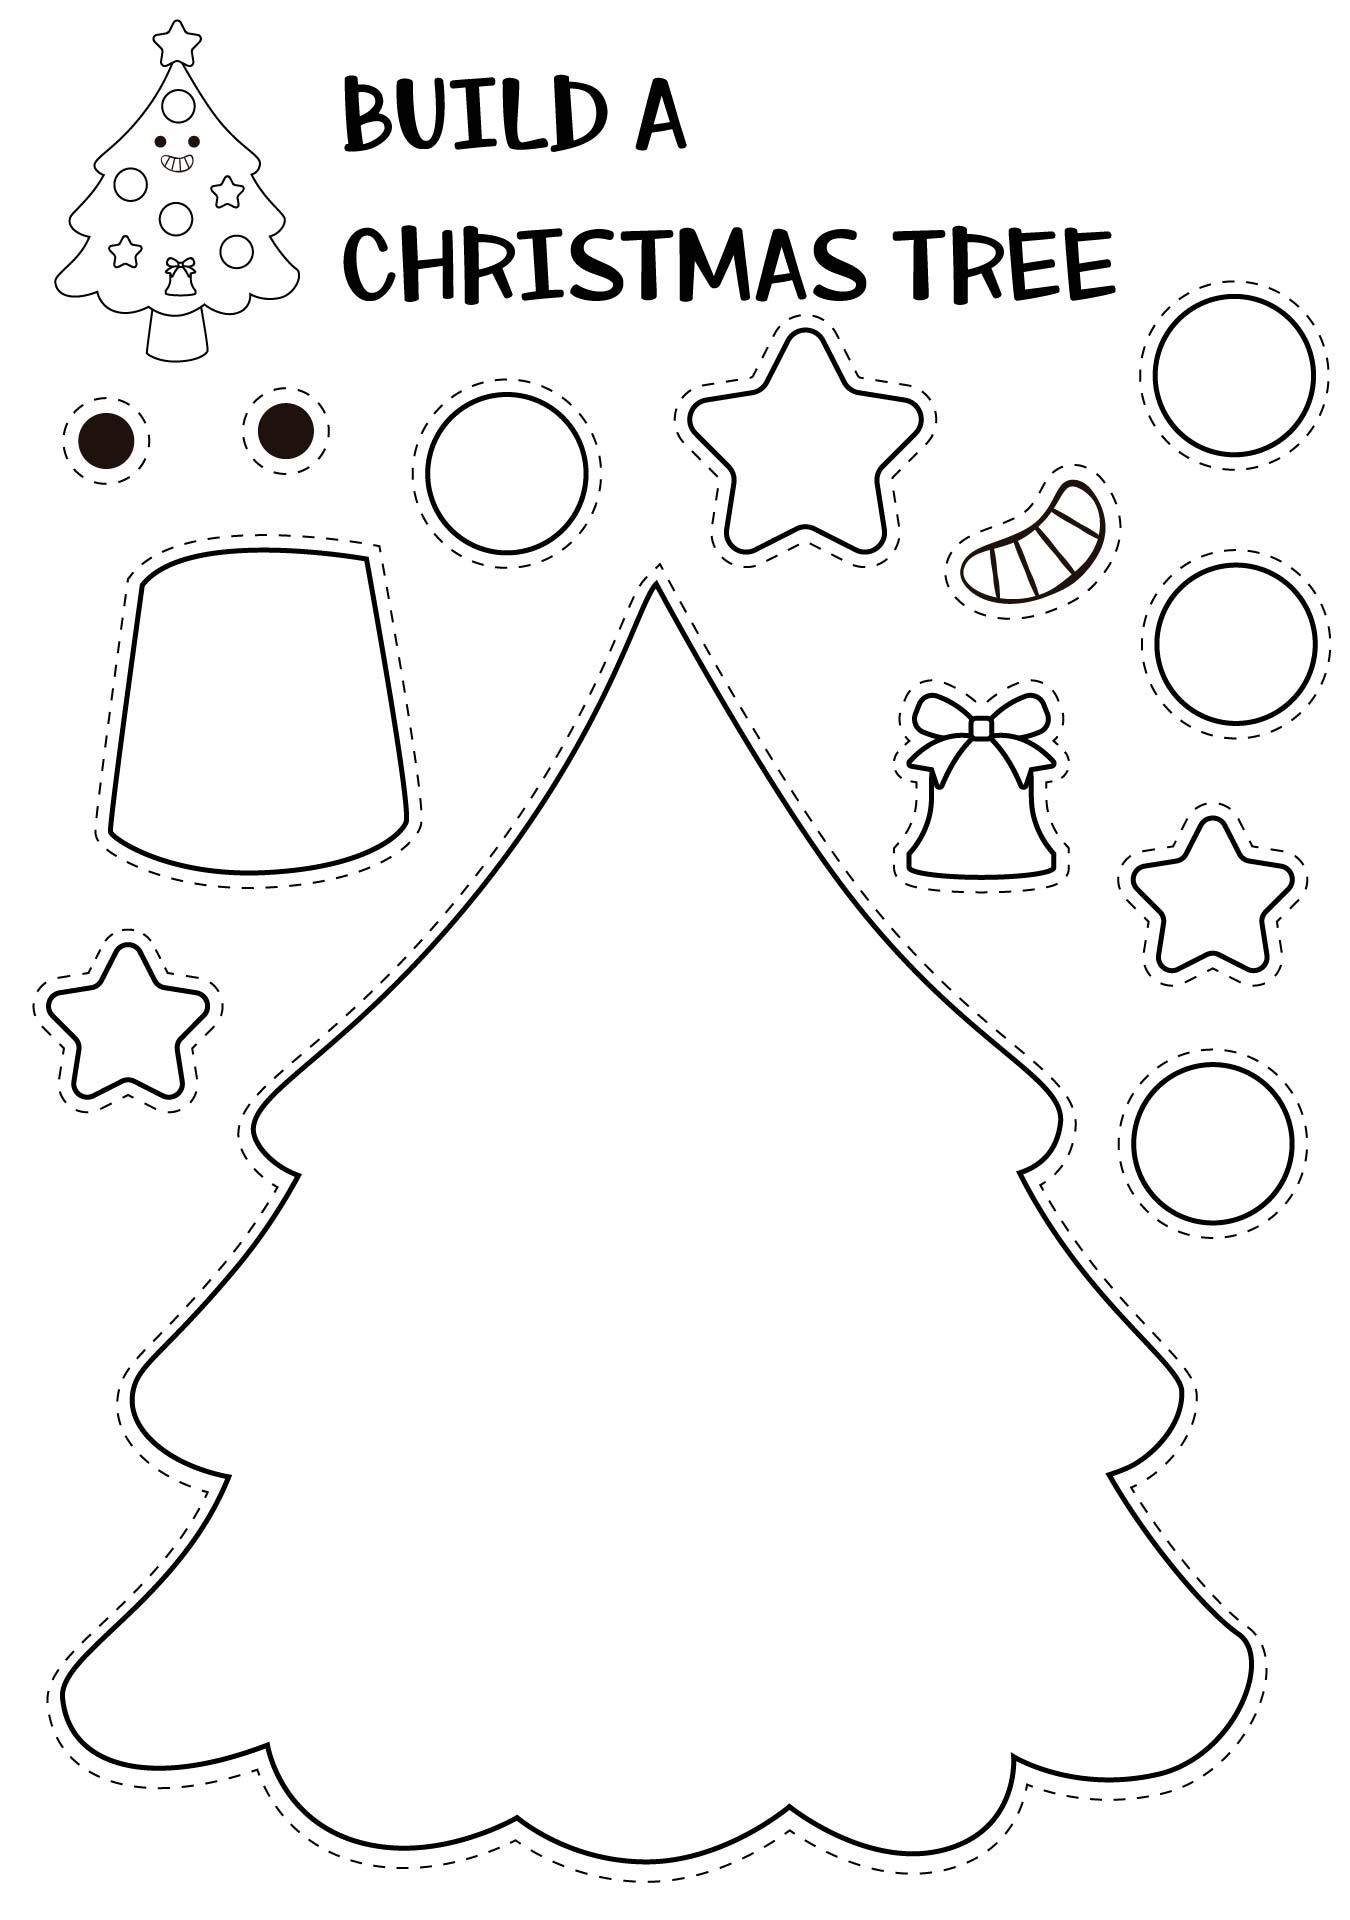 Preschool Christmas Crafts - 14 Free PDF Printables | Printablee